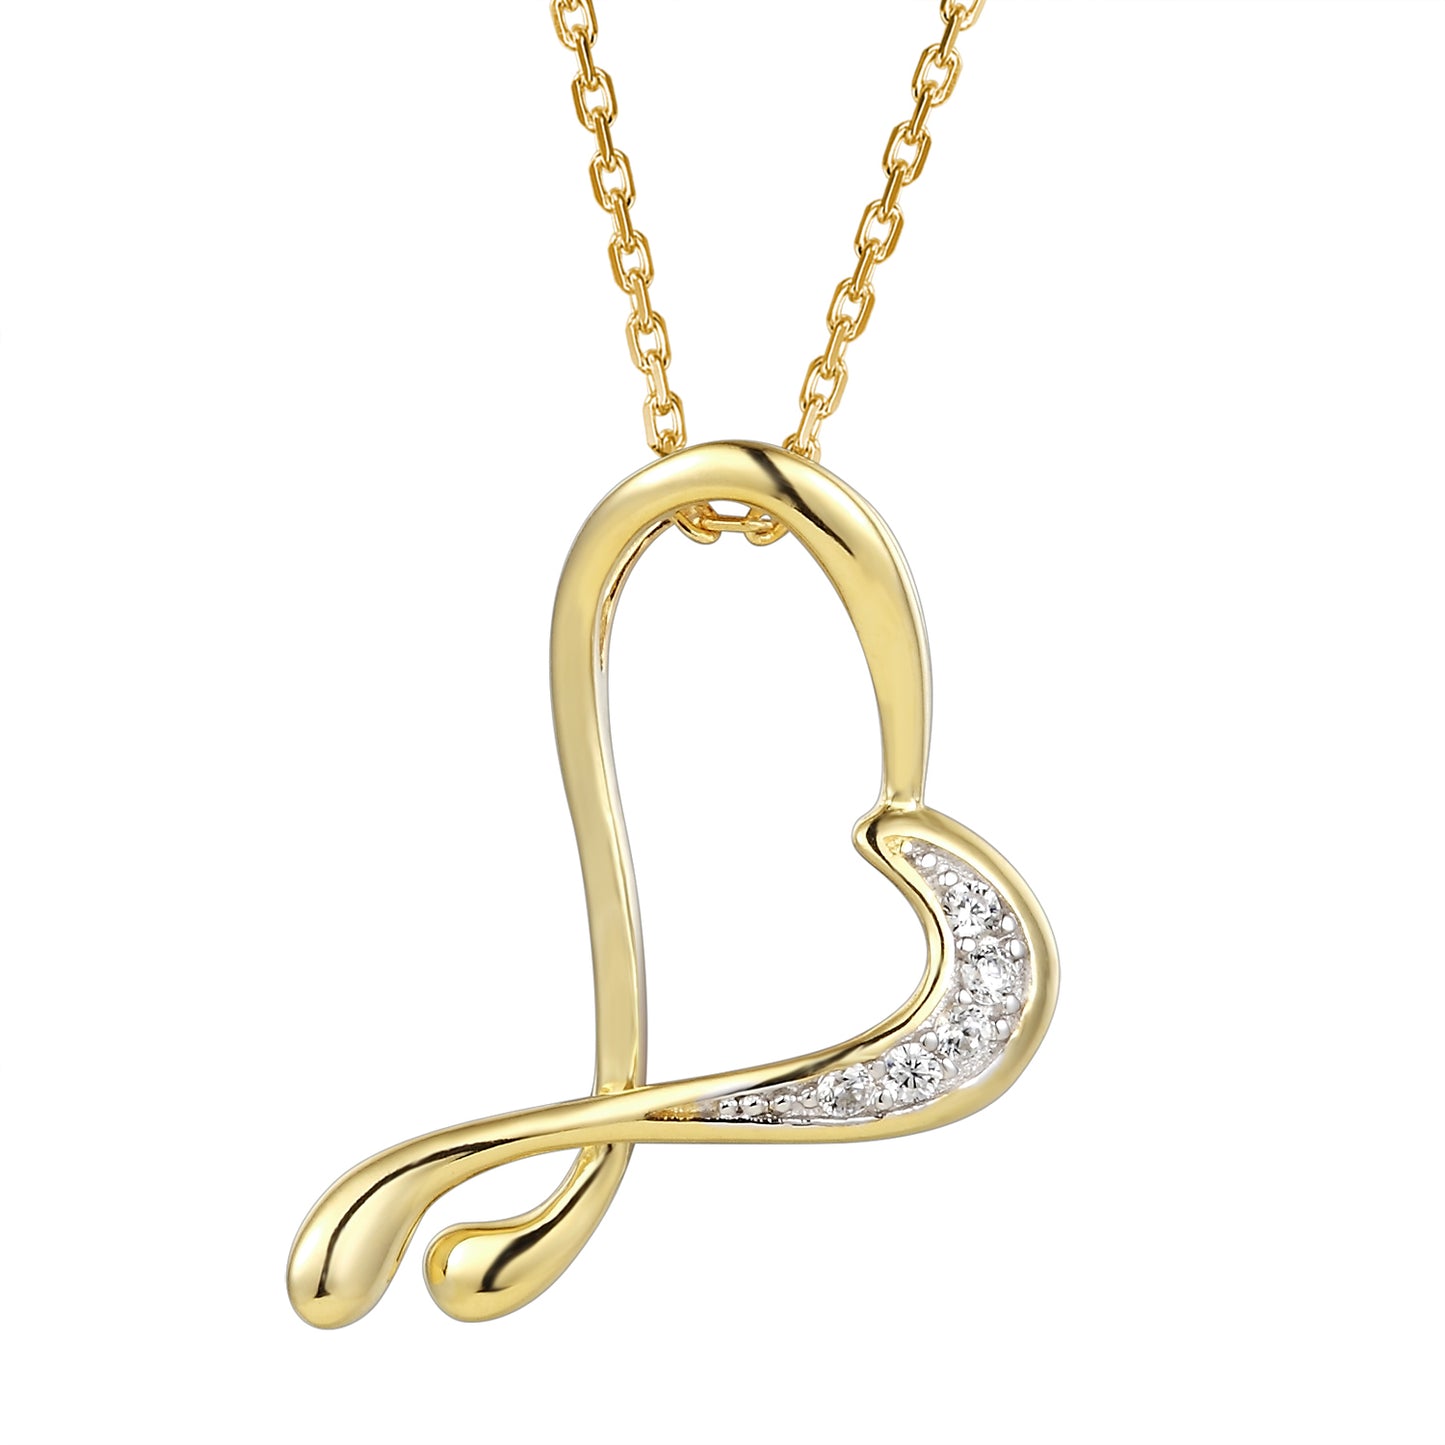 Tilted 14k Gold Finish Open Heart Twisted Pendant Gift Set